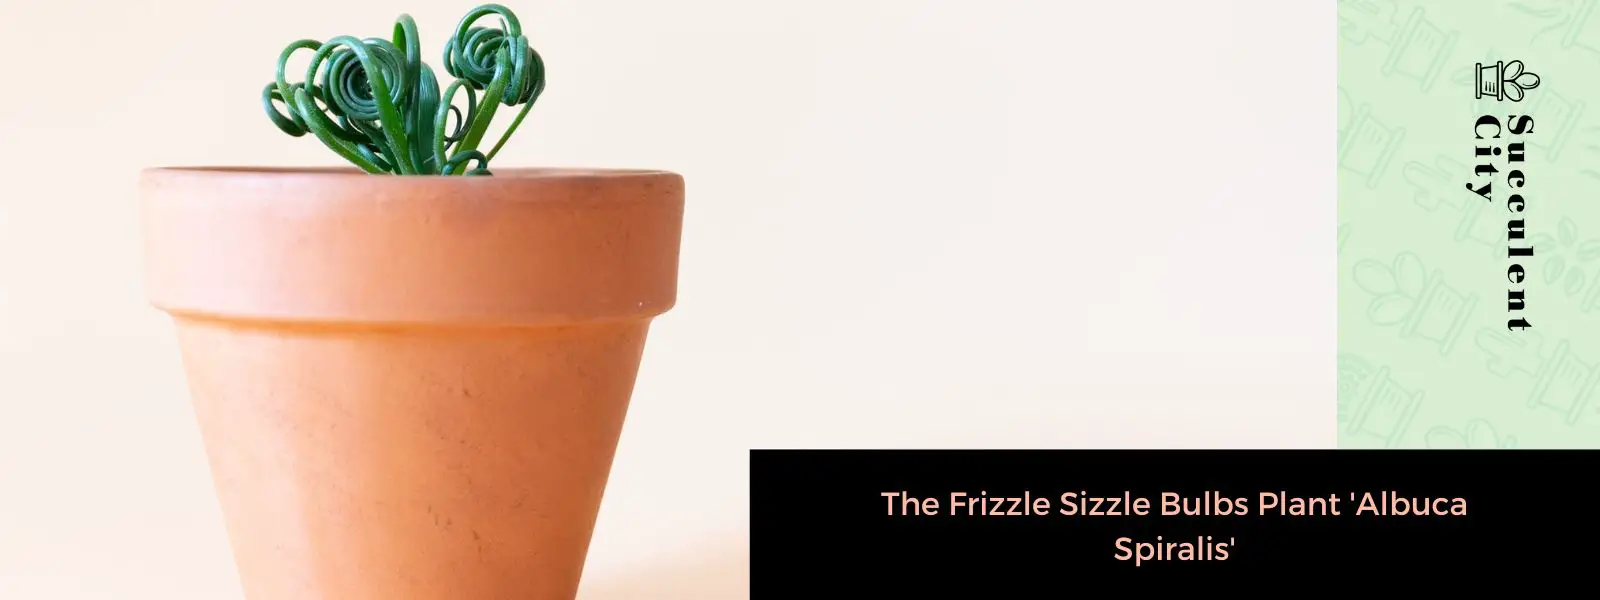 La planta Frizzle Sizzle 'Albuca Spiralis'